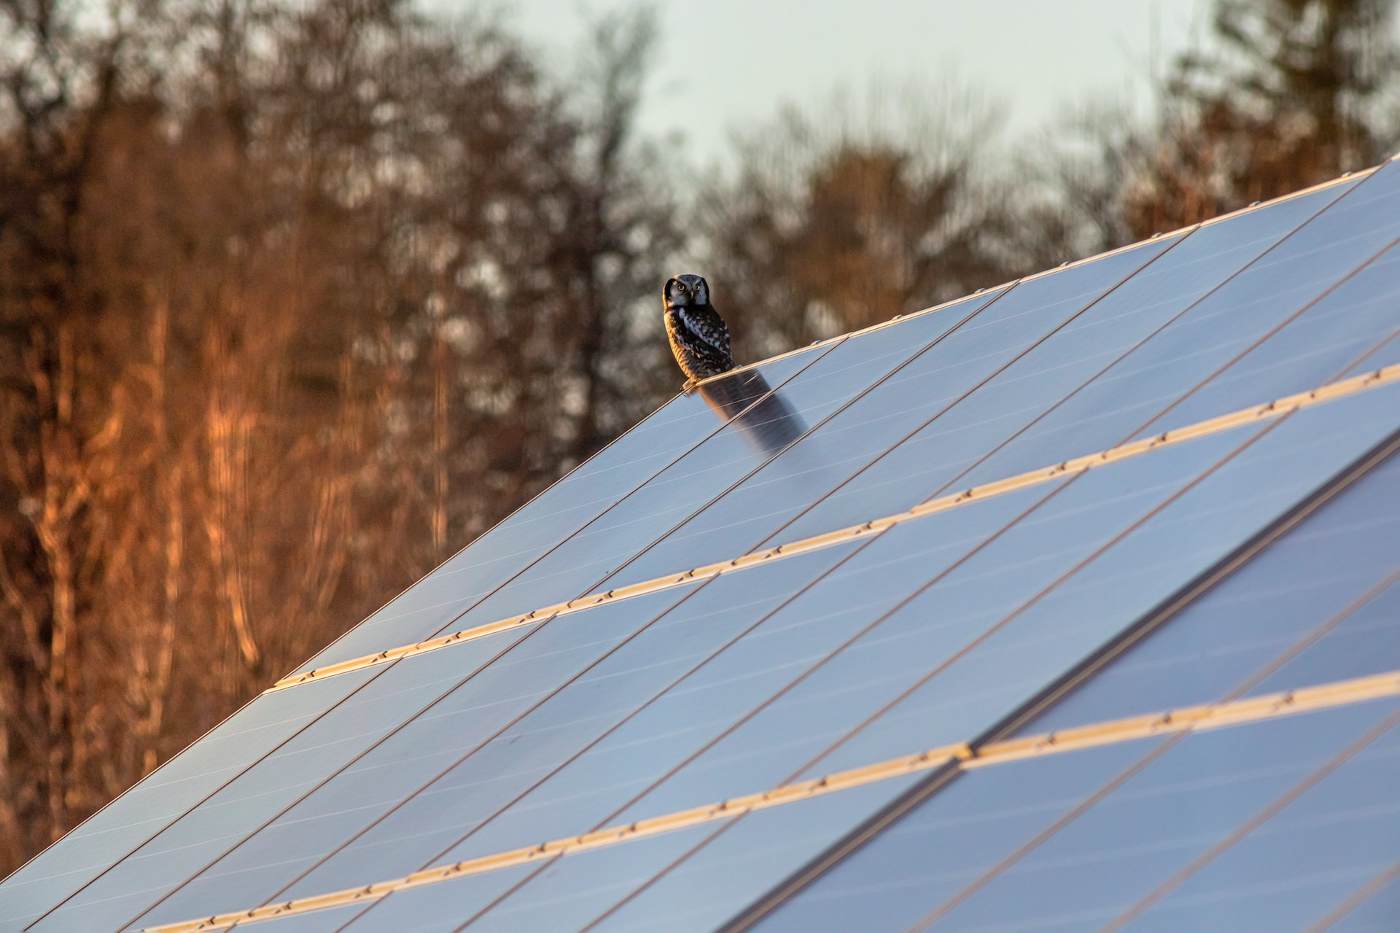 owl on solar paneled roof - how heavy are solar panels